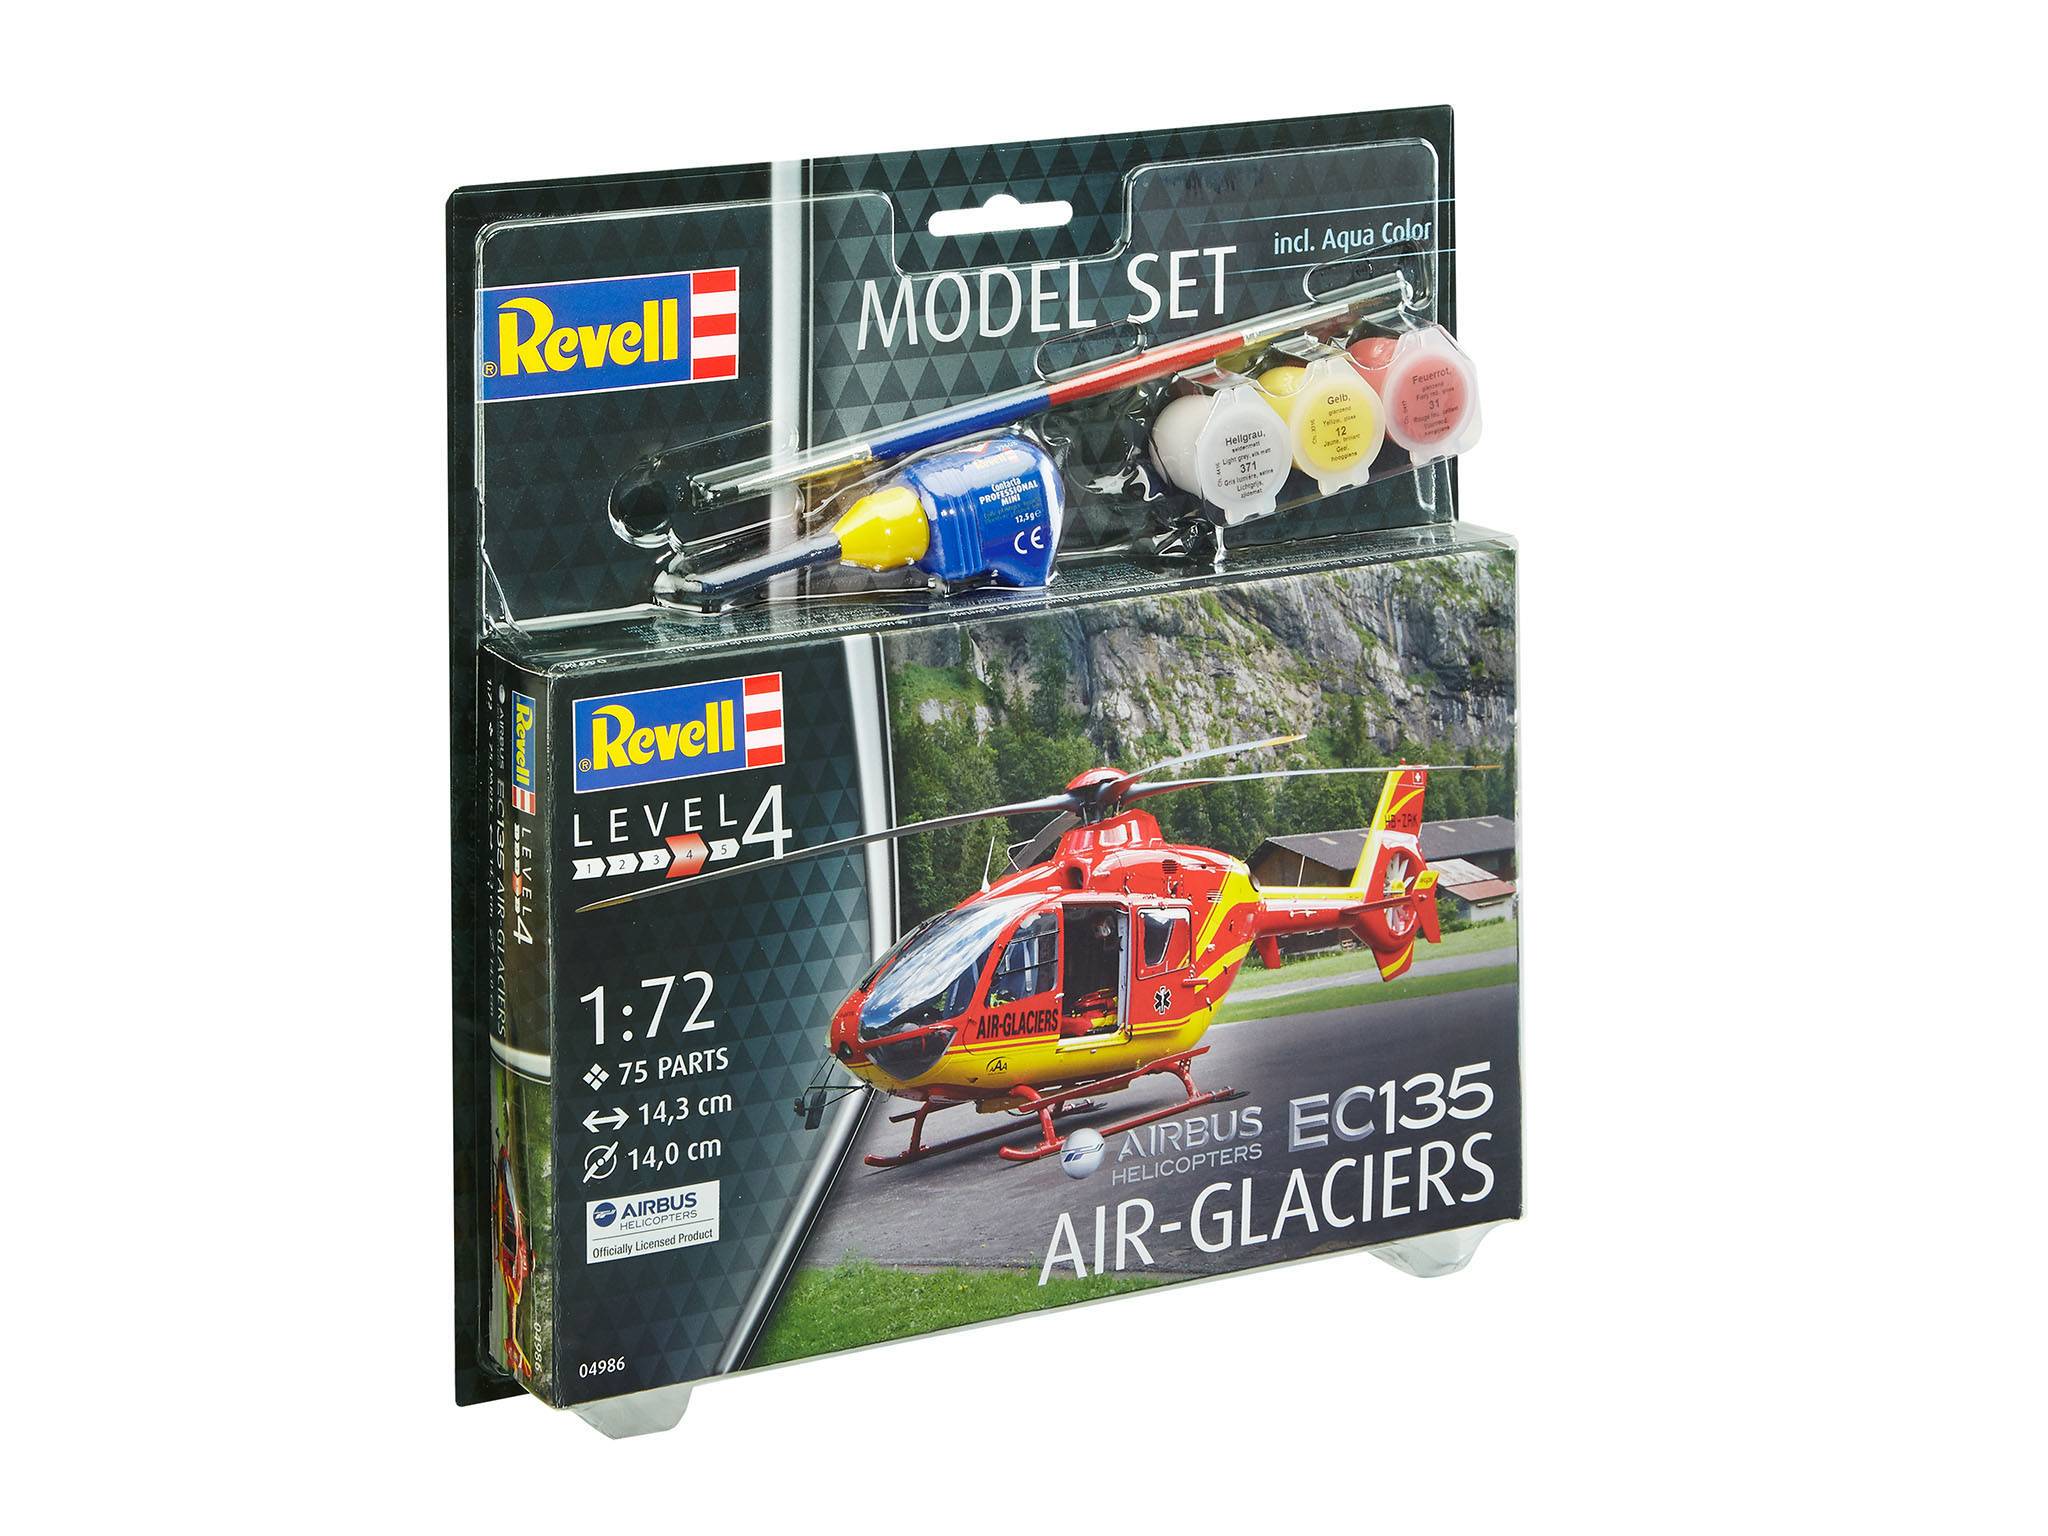 Spielwaren, AIR-GLACIERS Mehrfarbig Set Model EC135 REVELL